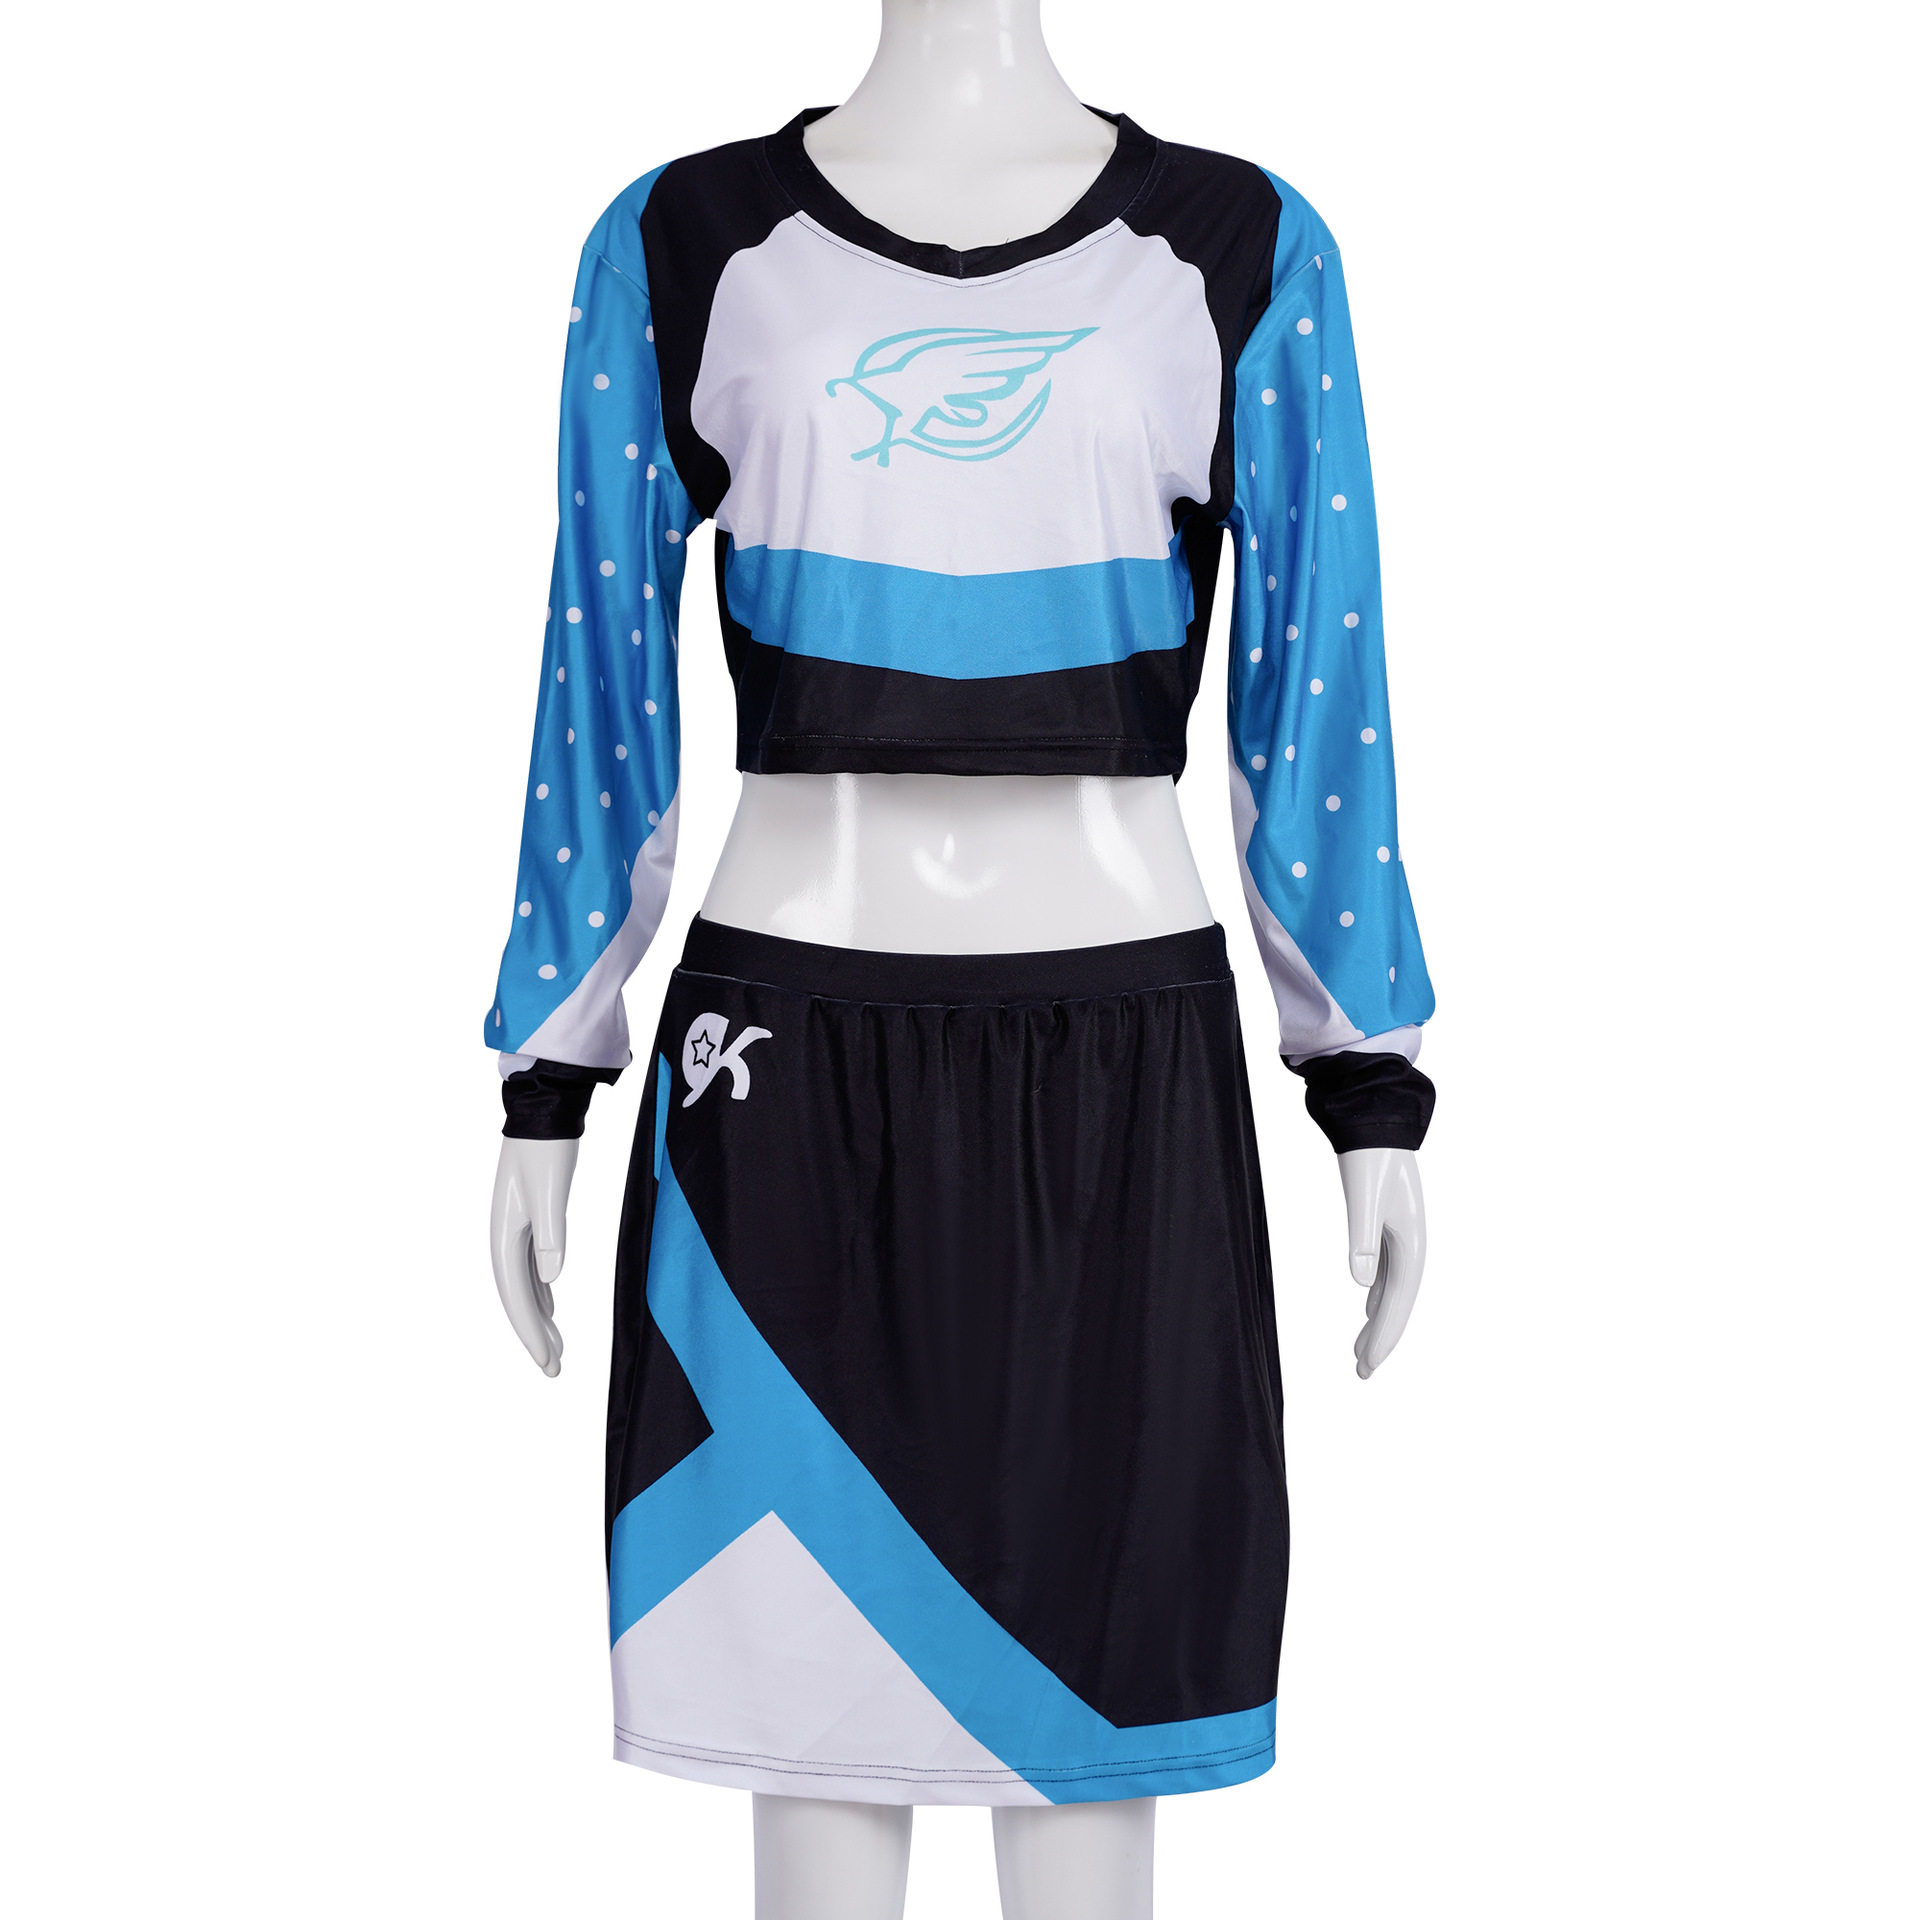 American TV series Exciting Cheerleader Uniforms Performance Costumes Maddy's Same Cheerleader Uniforms